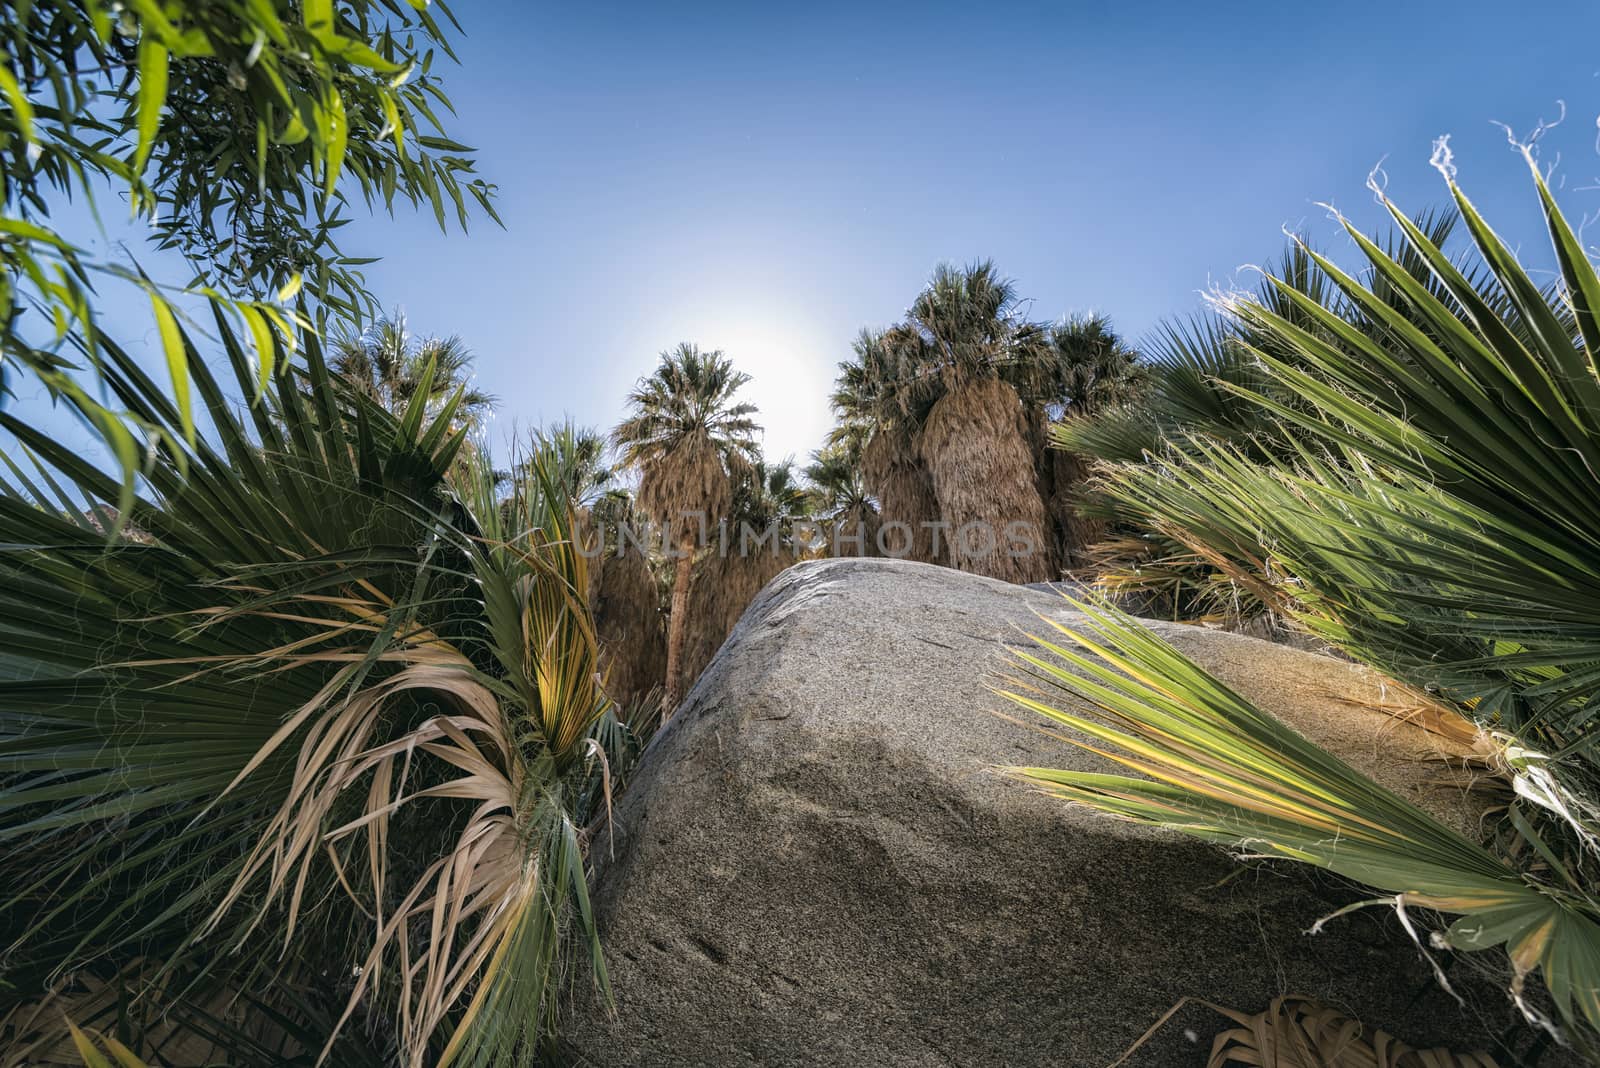 Palm Oasis in the Desert by patricklienin